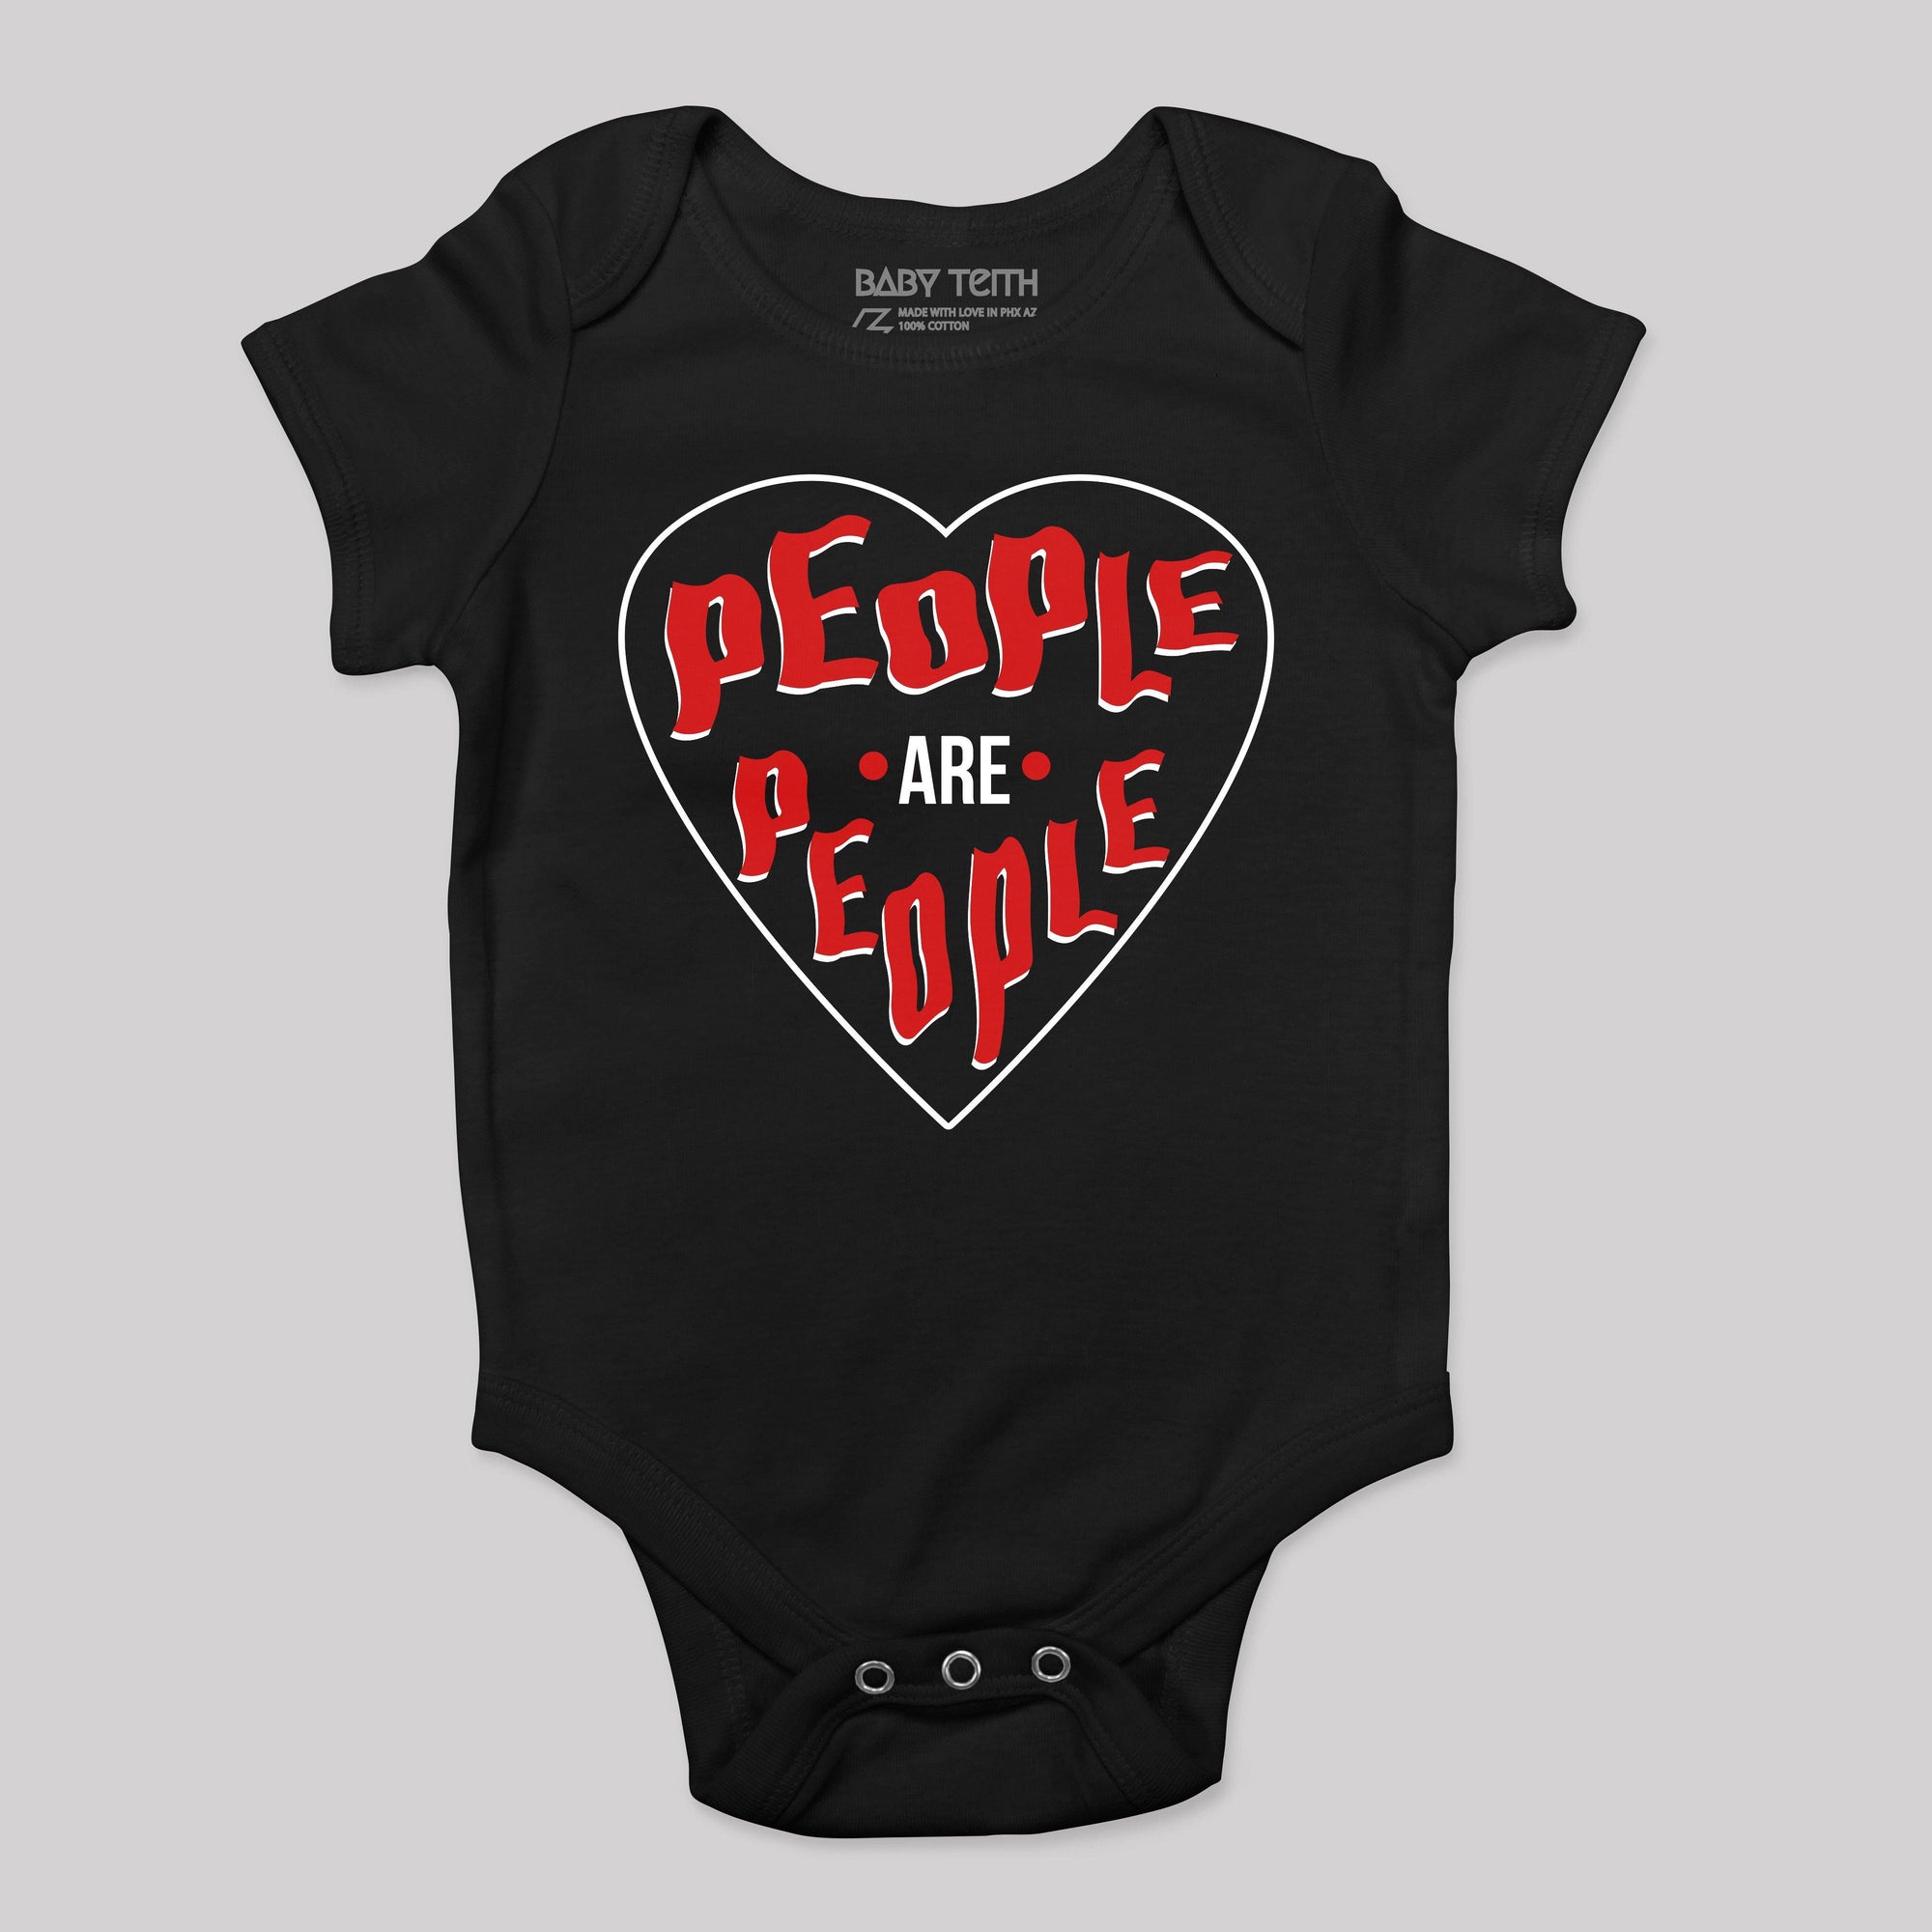 "People Are People" Sleeve Baby Bodysuit - Baby Teith